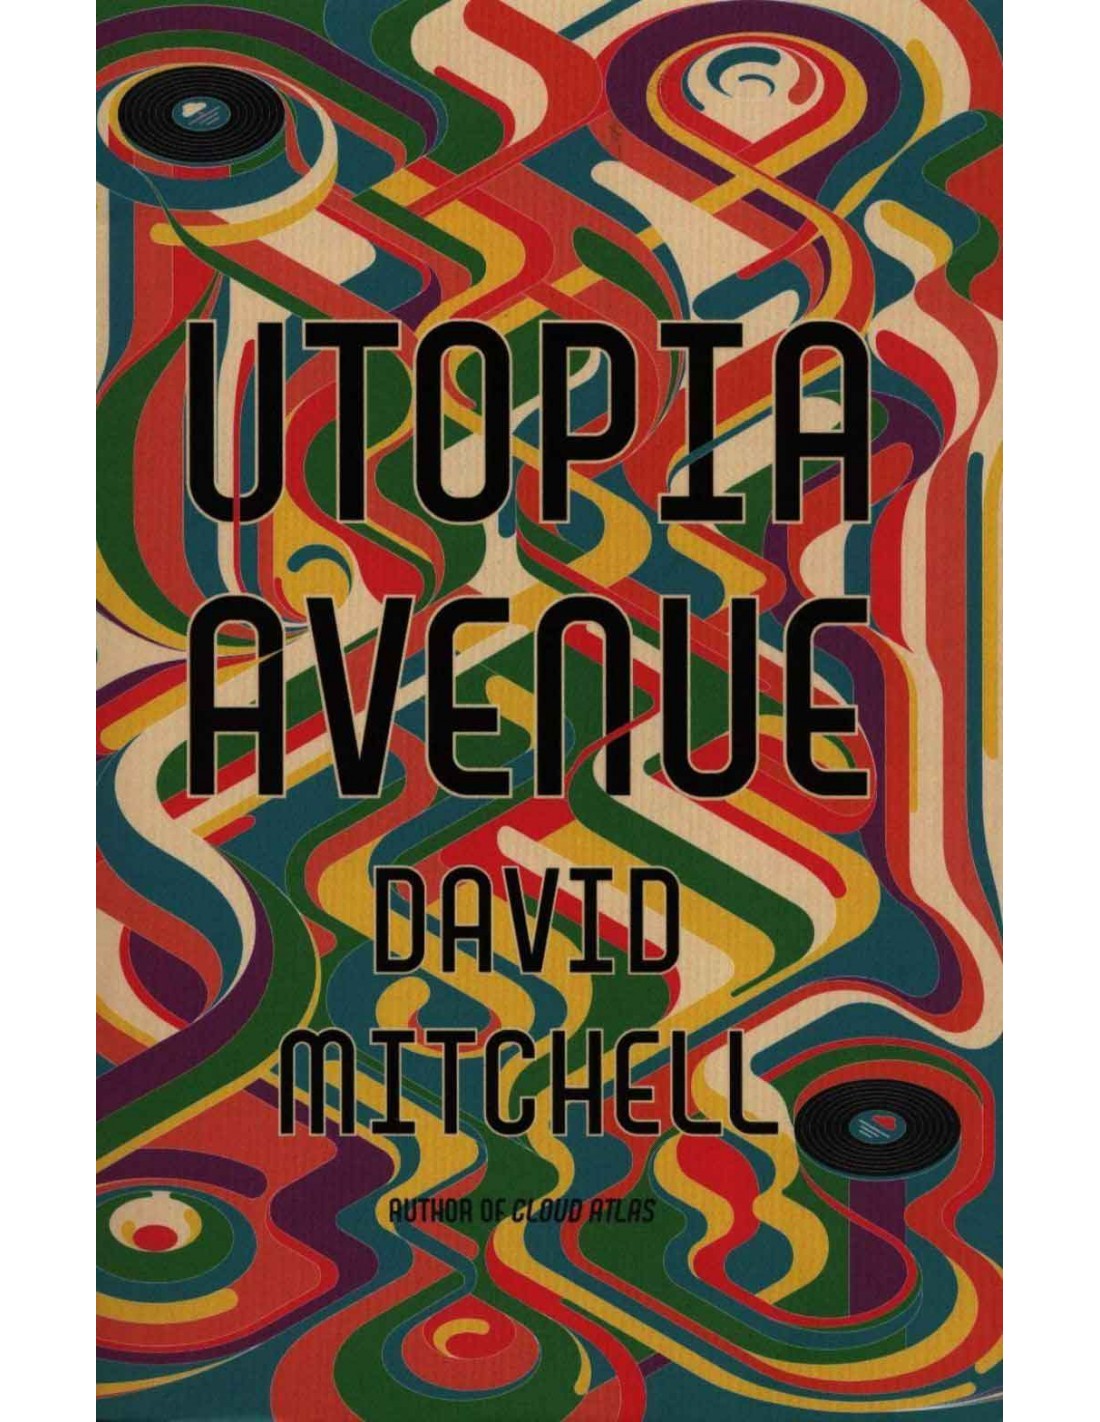 review utopia avenue